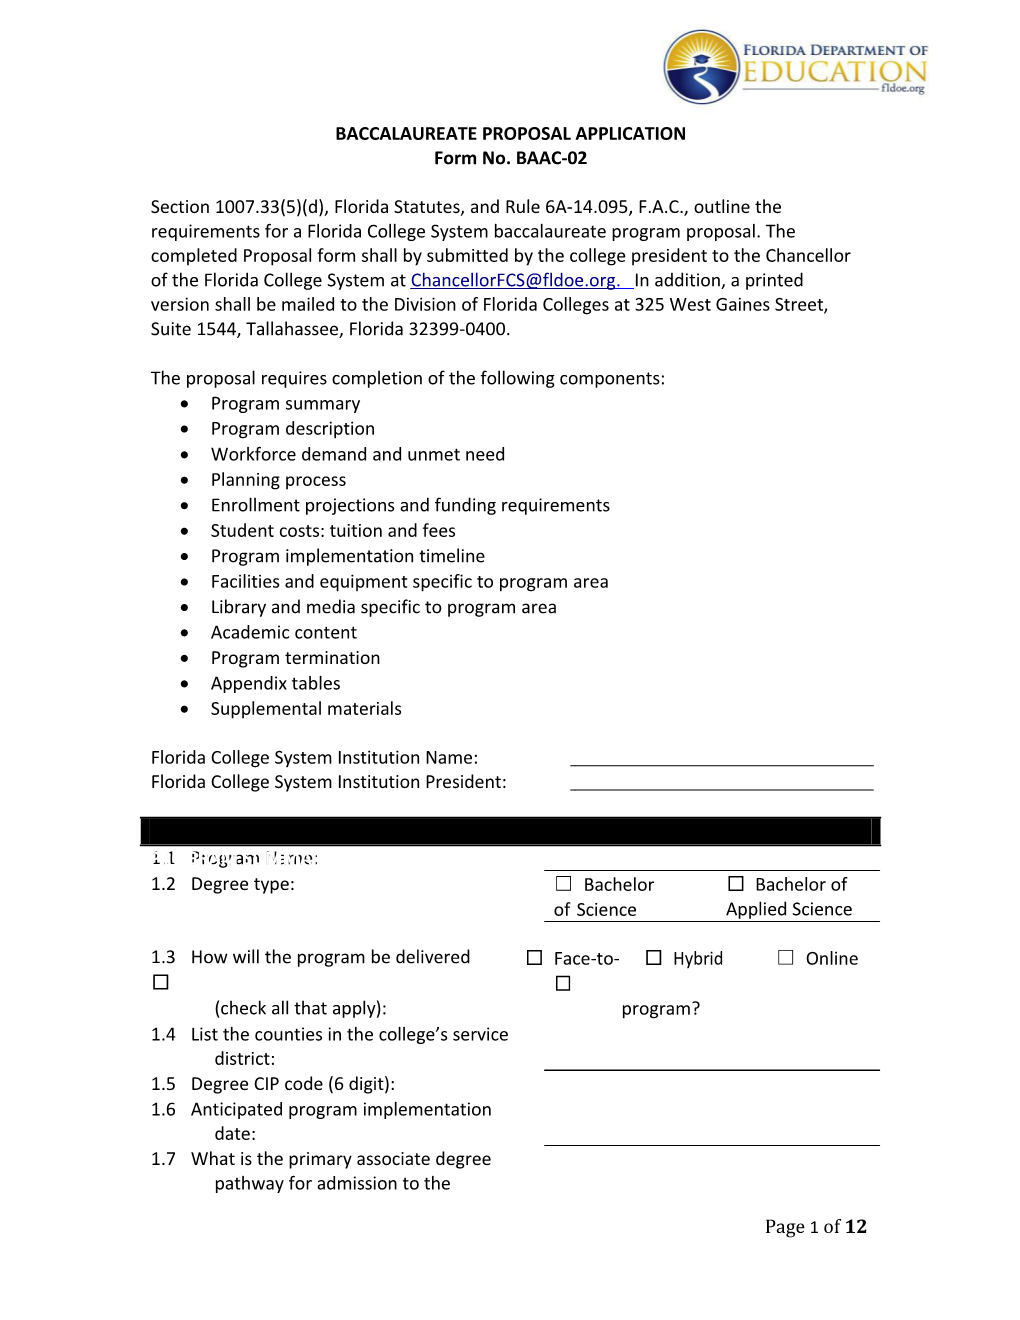 Baccalaureate Proposal Application - Form No. BAAC-02